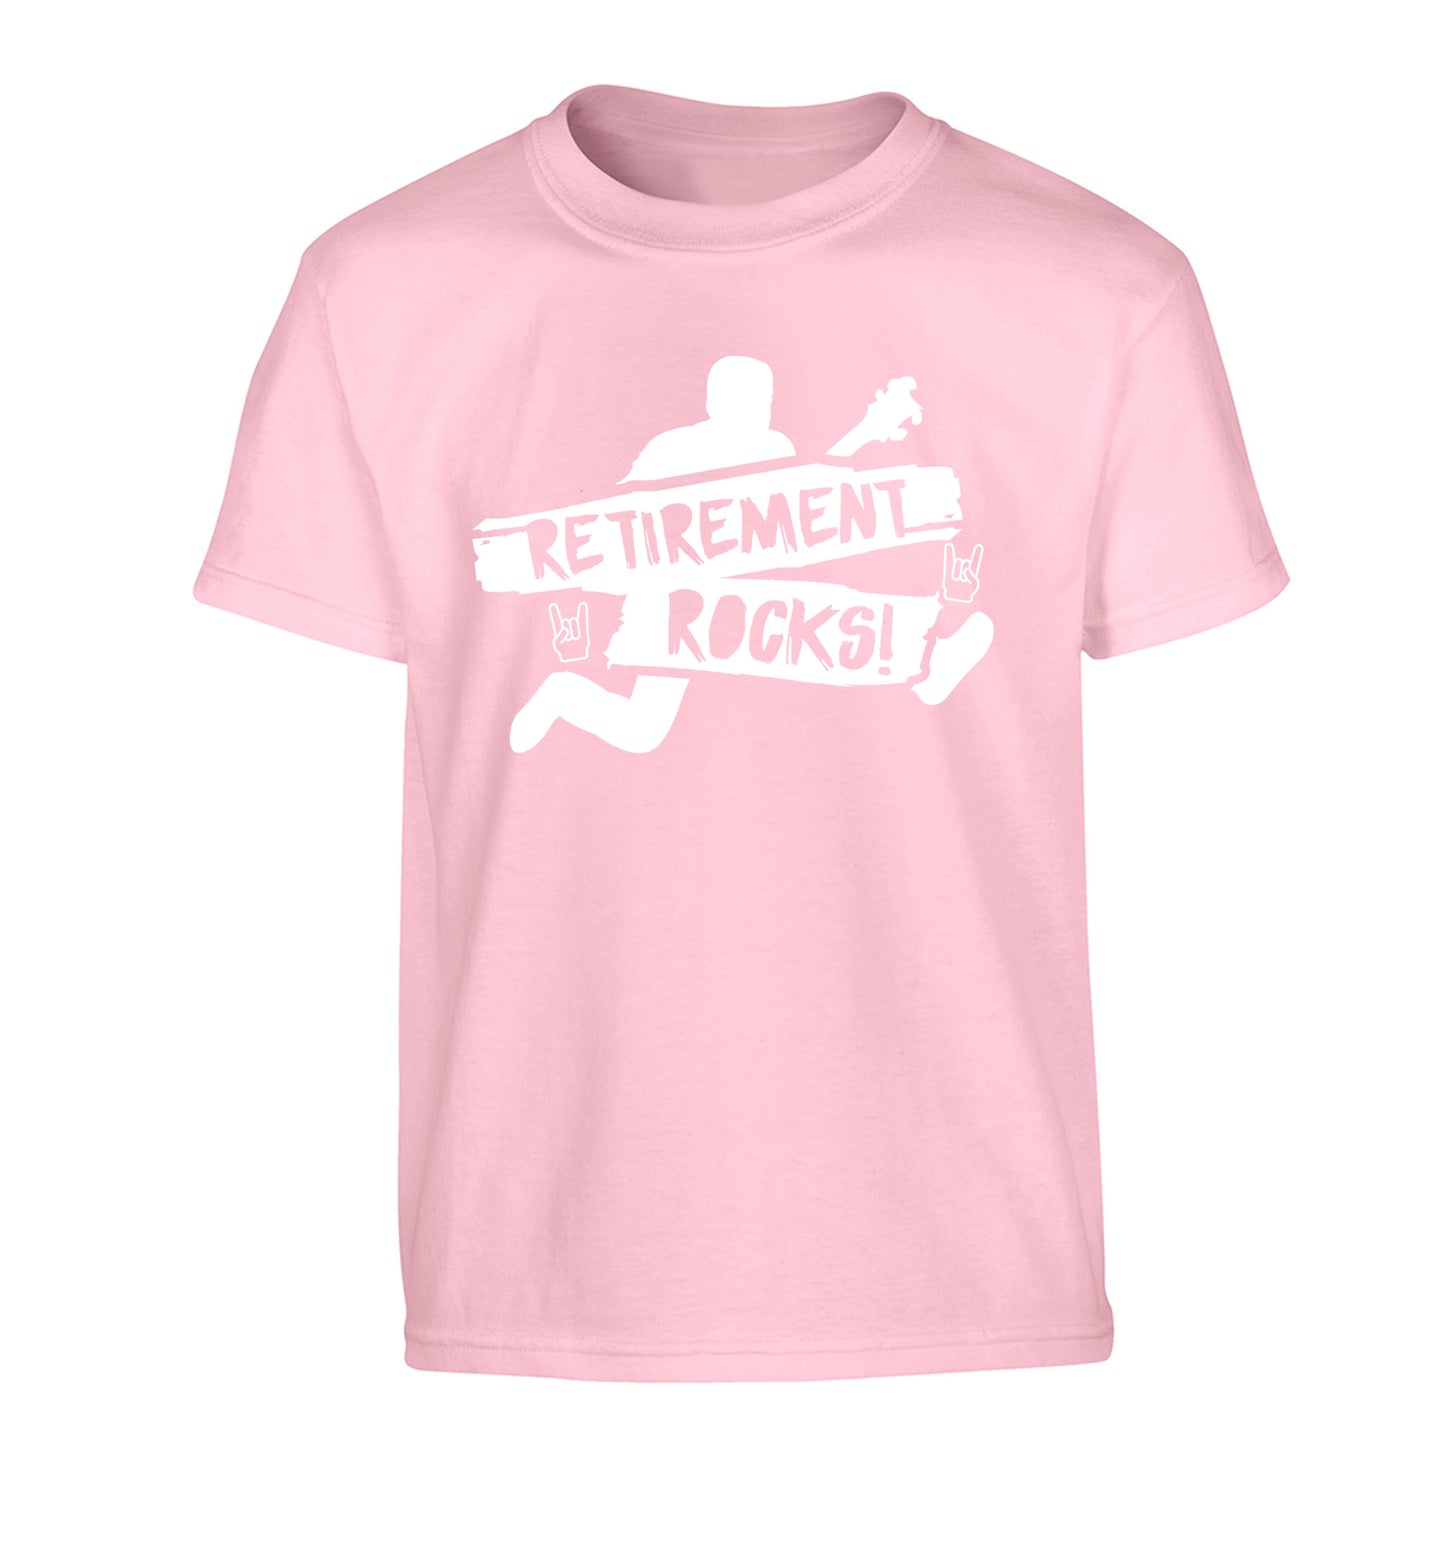 Retirement Rocks Children's light pink Tshirt 12-13 Years